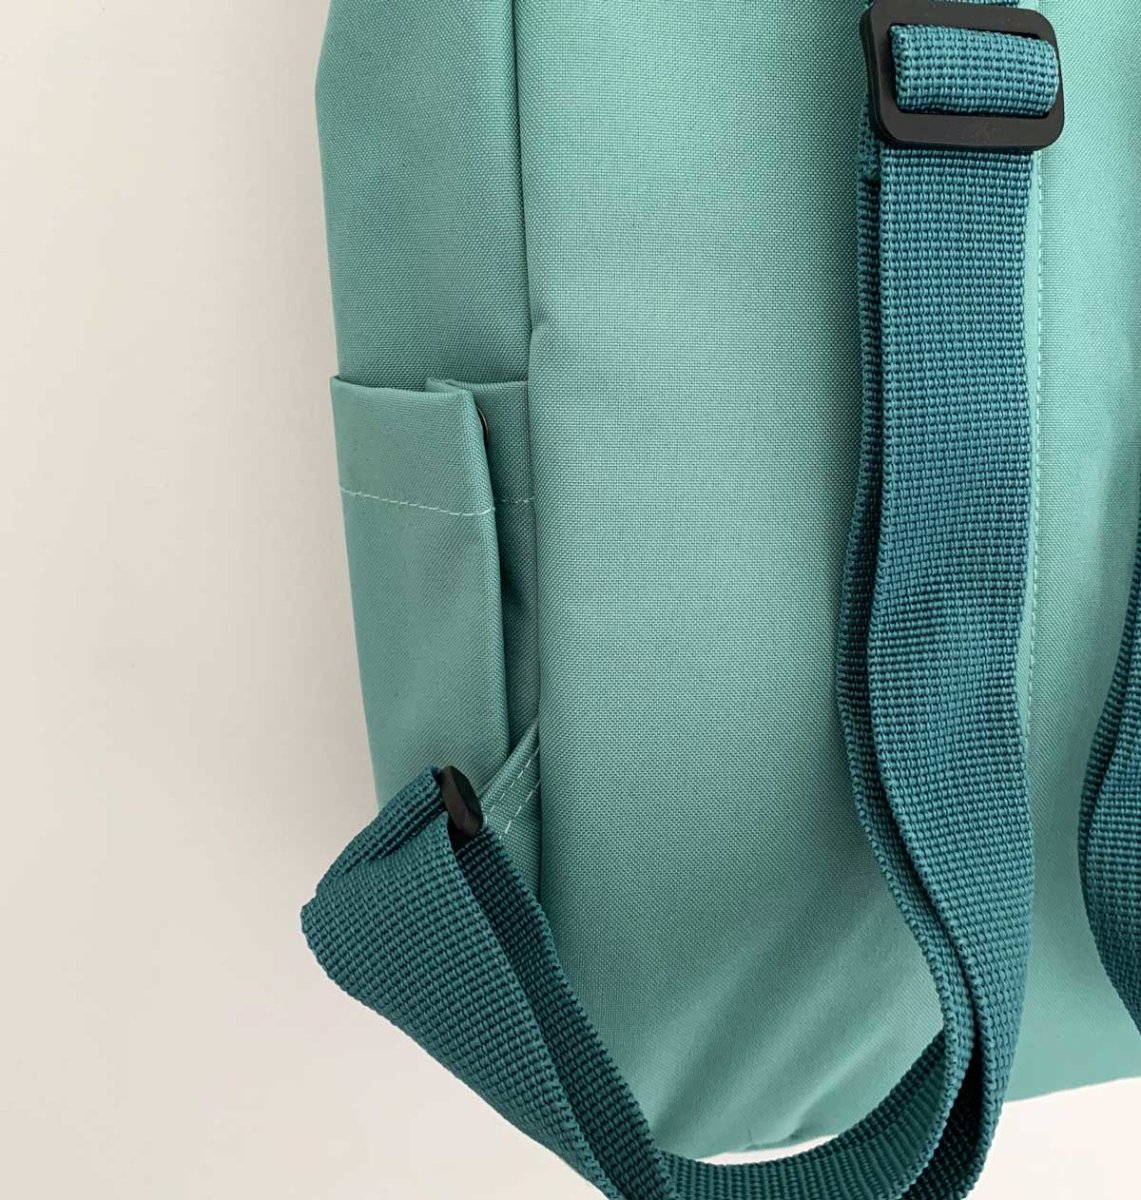 Capybara Mini Roll-top Recycled Backpack - Blue Panda